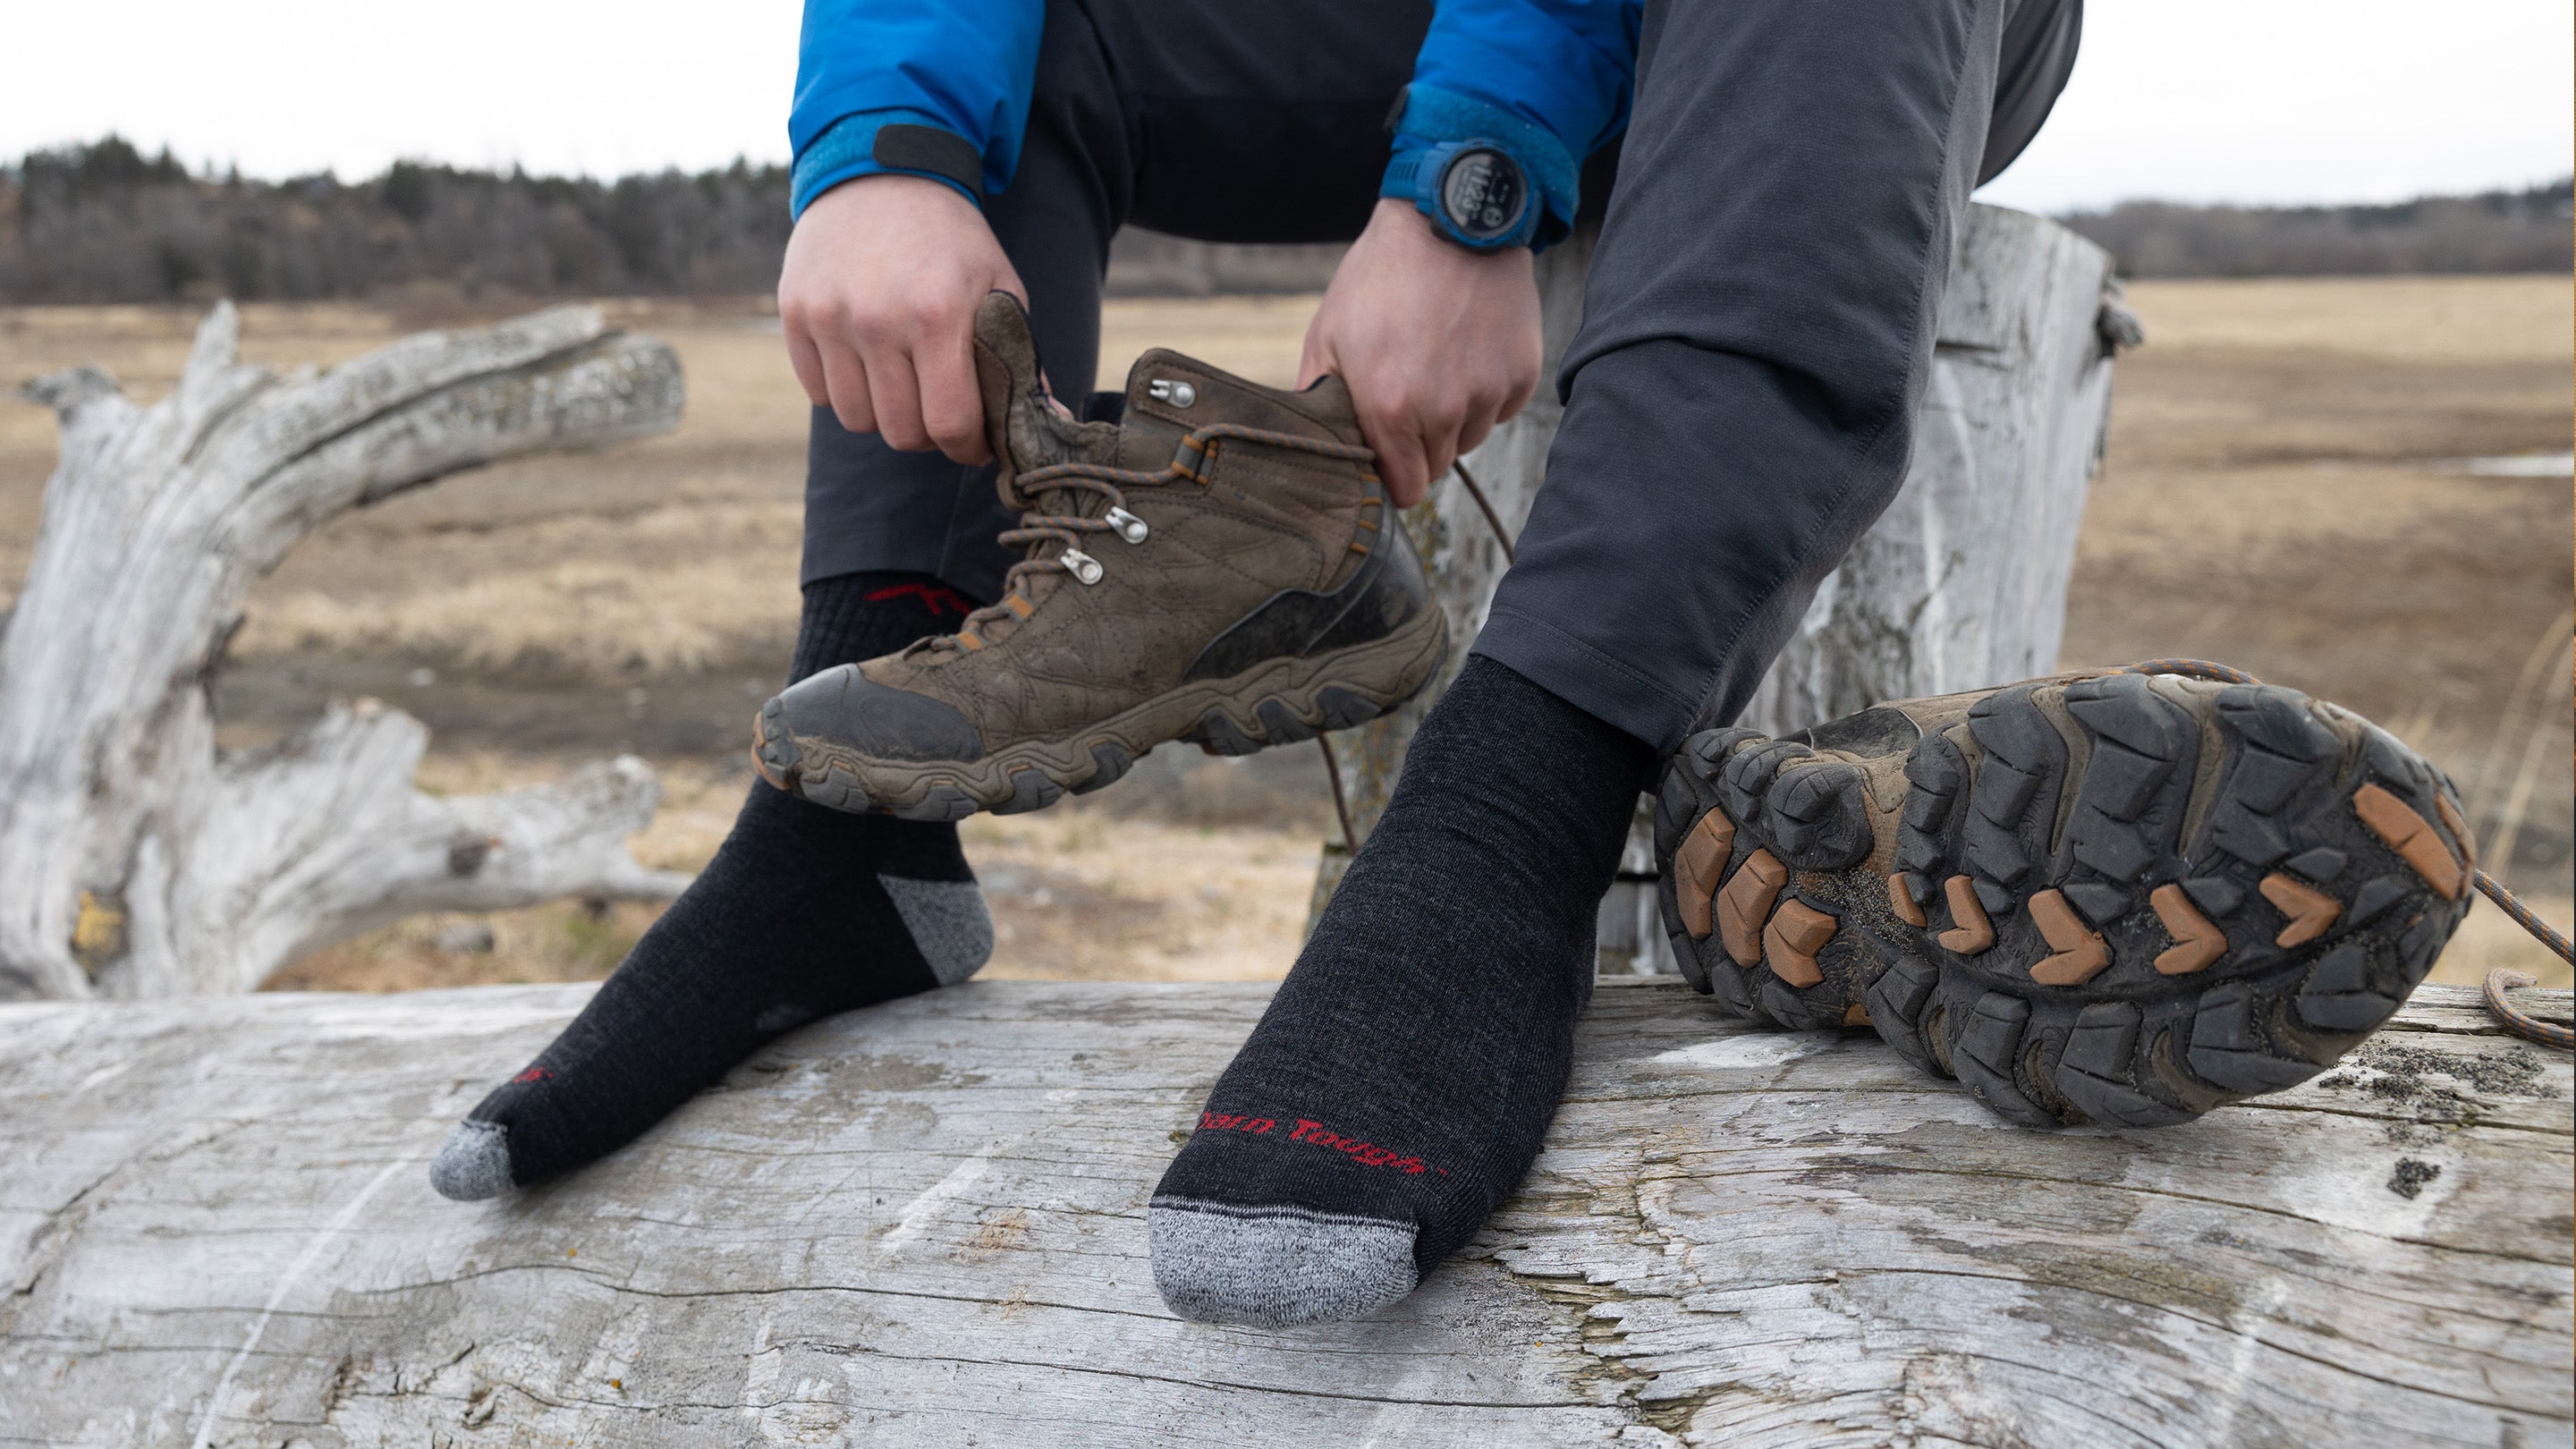 Men's Hiker Boot Hiking Socks – Darn Tough